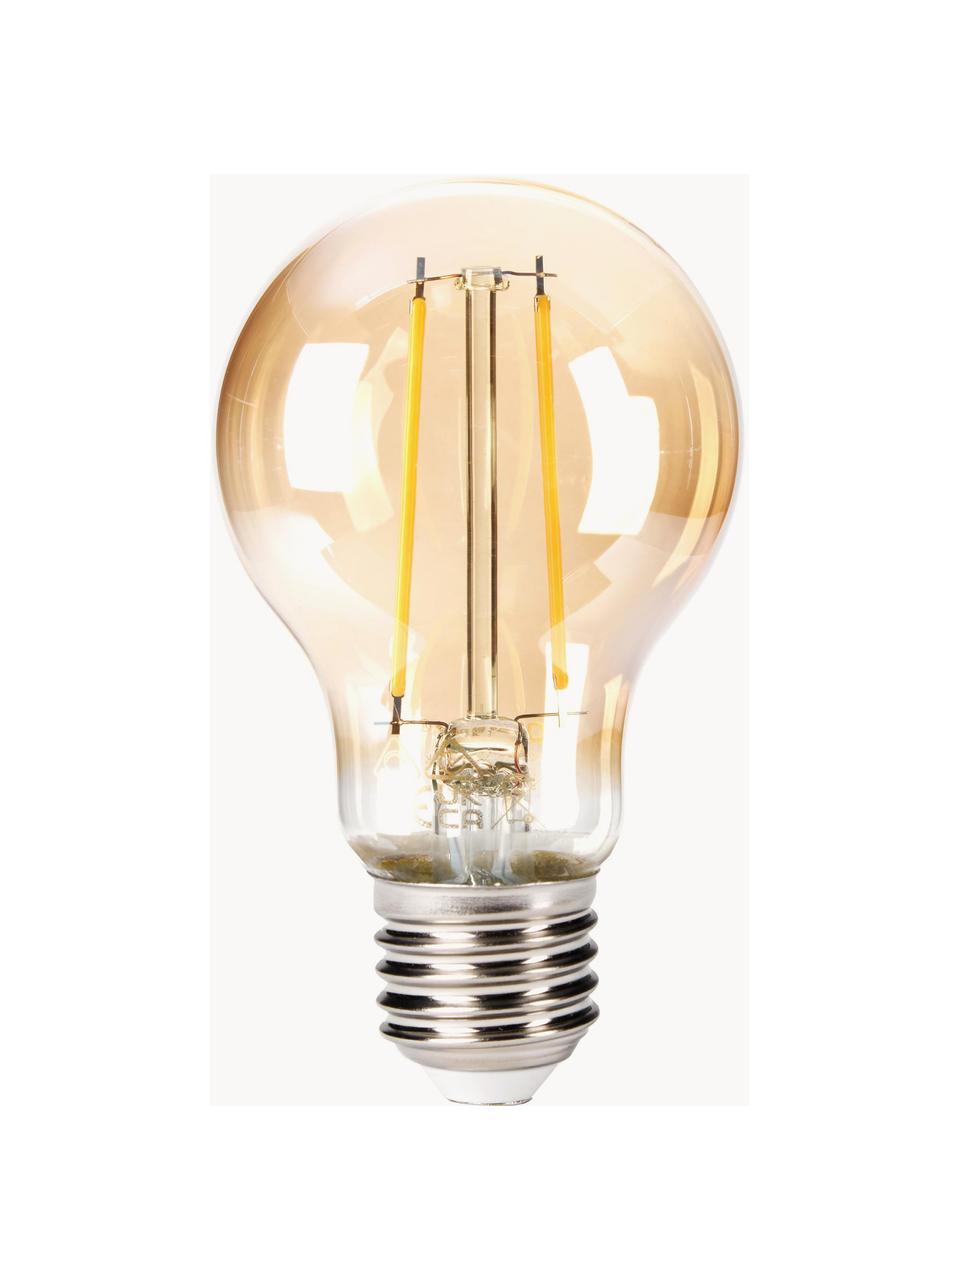 Žárovka E27, teplá bílá, 1 ks, Transparentní, zlatá, Ø 6 cm, V 10 cm